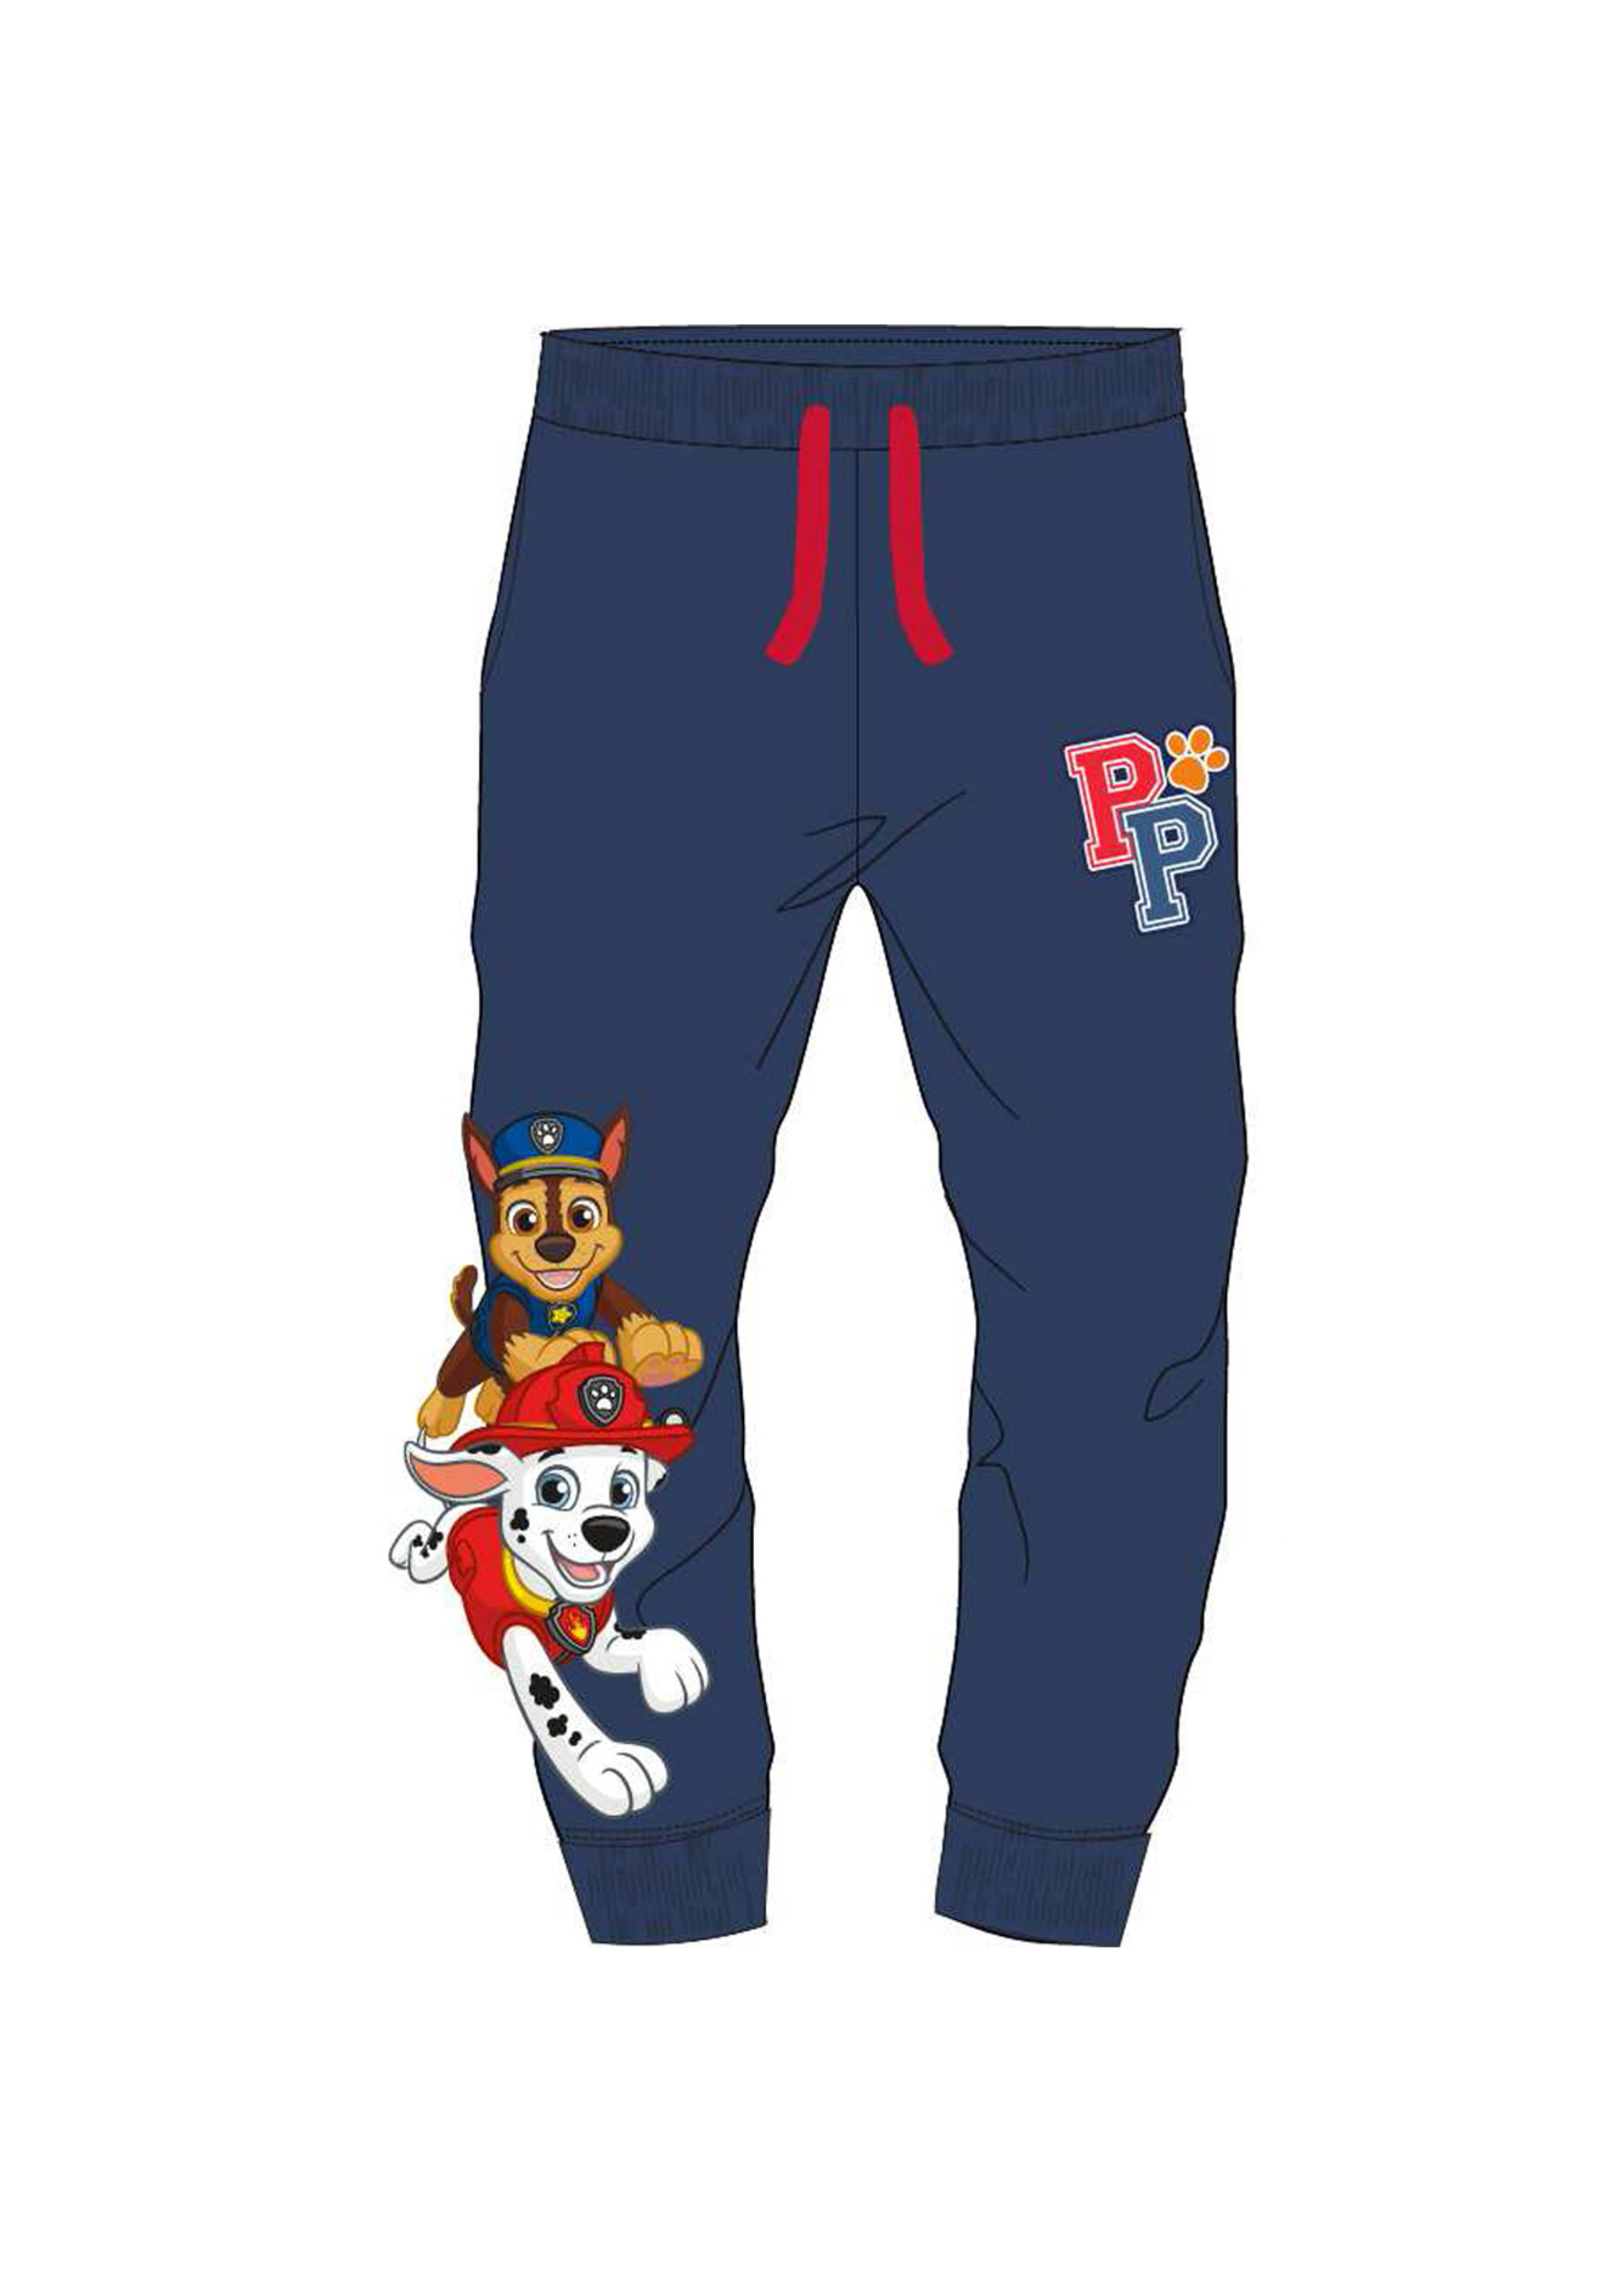 Paw Patrol jogging pants from Nickelodeon navy blue 